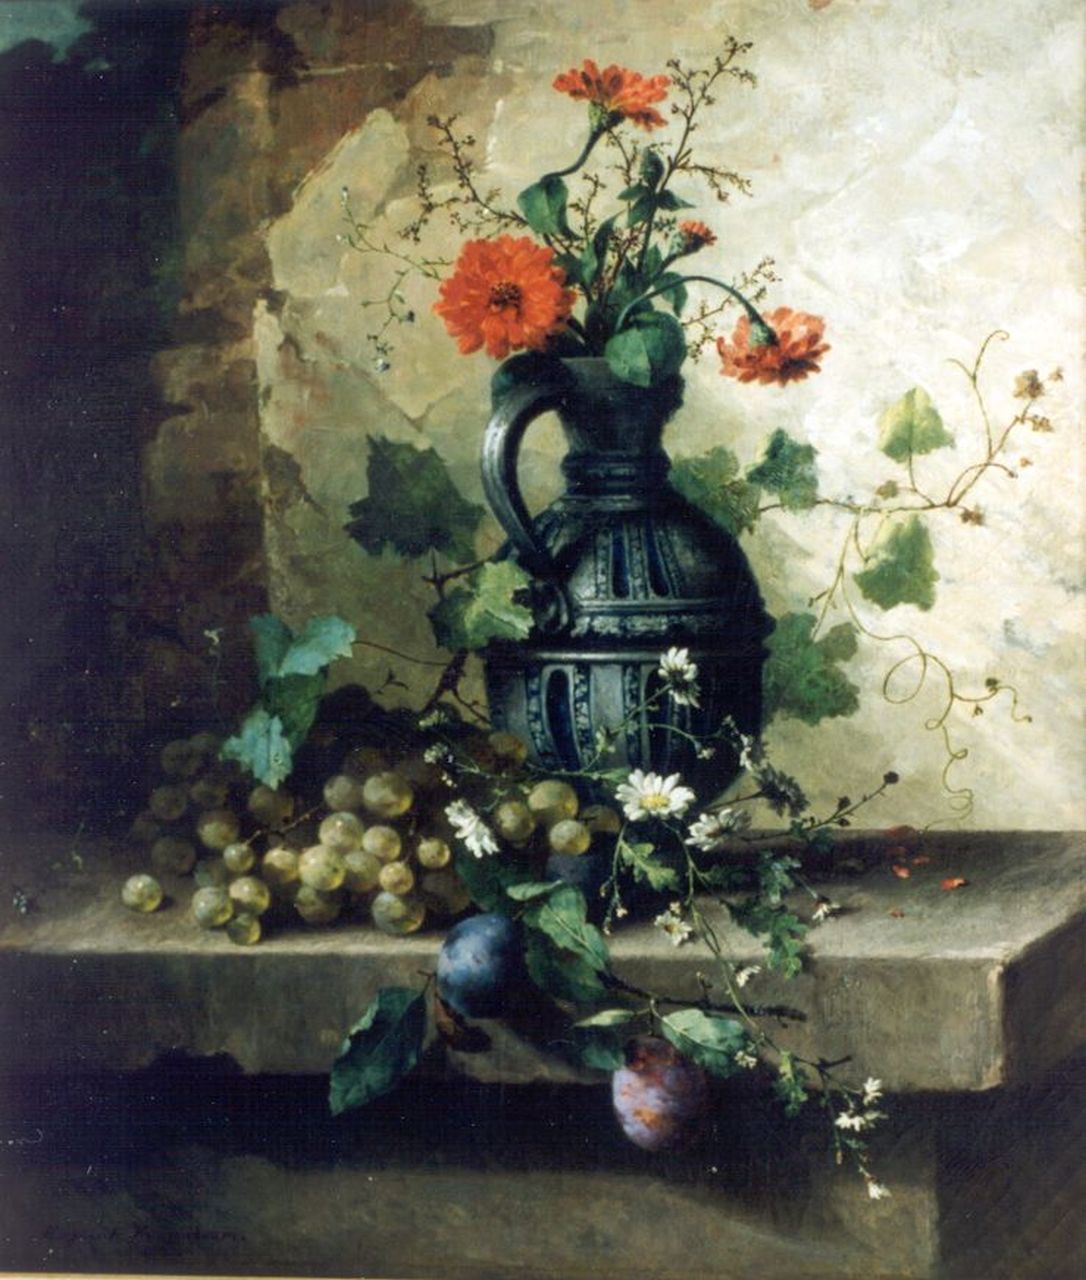 Roosenboom M.C.J.W.H.  | 'Margaretha' Cornelia Johanna Wilhelmina Henriëtta Roosenboom, Stilleven met bloemen, vruchten en stenen kruik, olieverf op doek 64,5 x 55,5 cm, gesigneerd linksonder